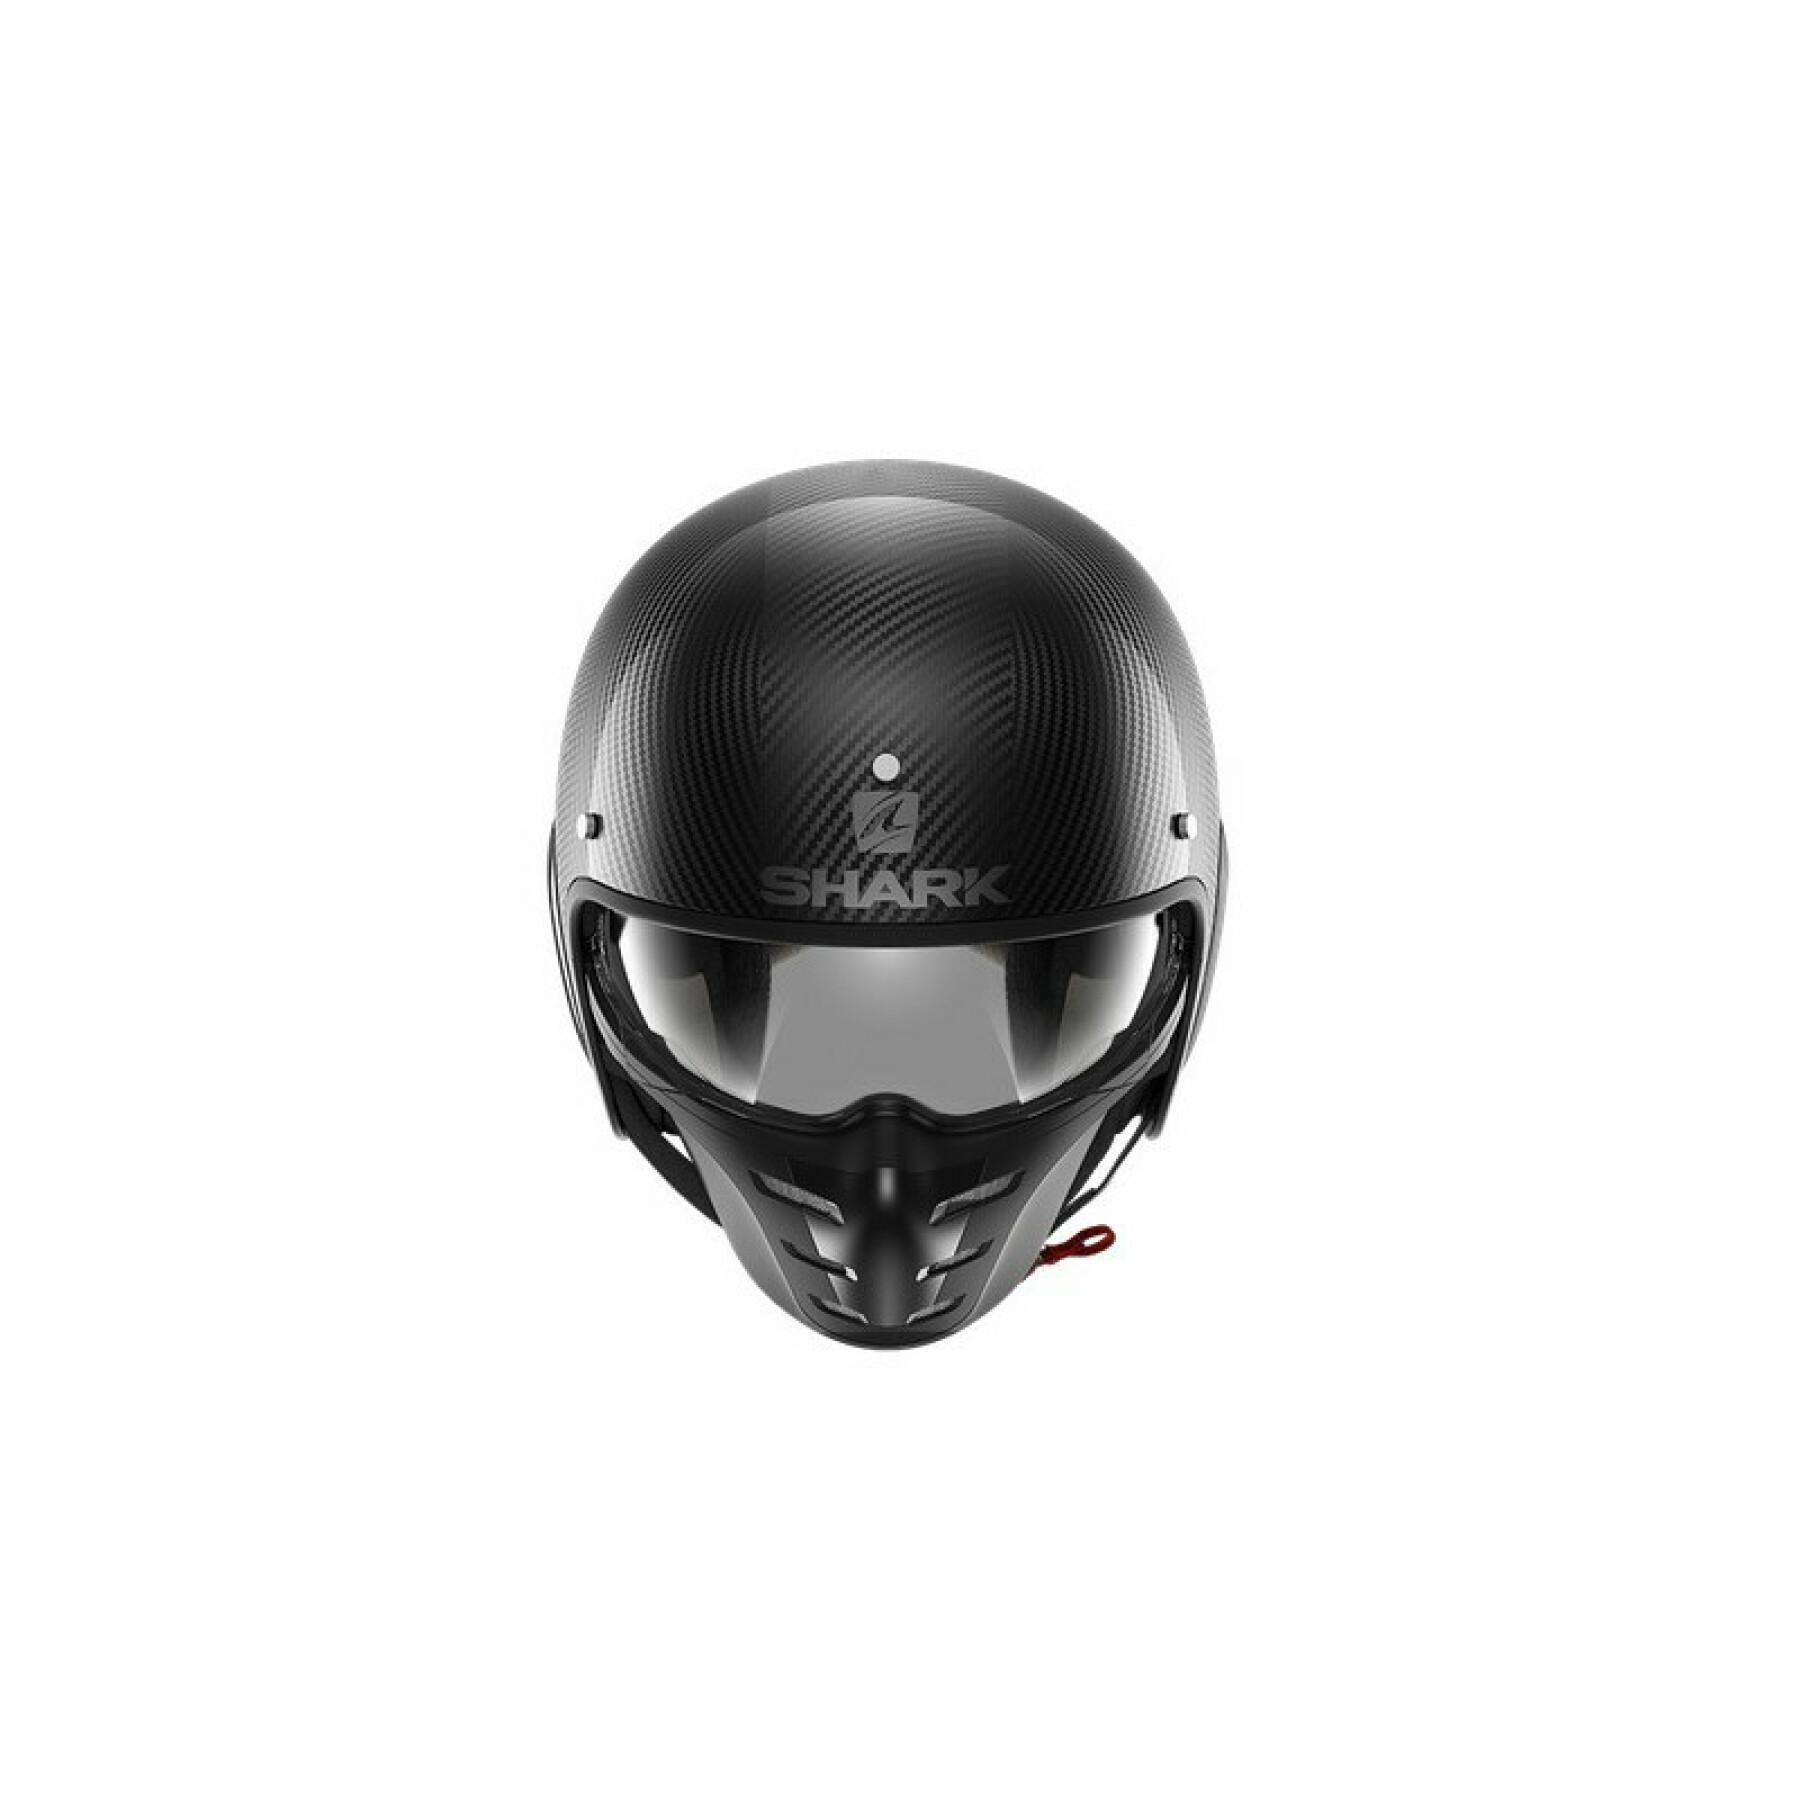 Jet motorcycle helmet Shark s-drak 2 carbon skin